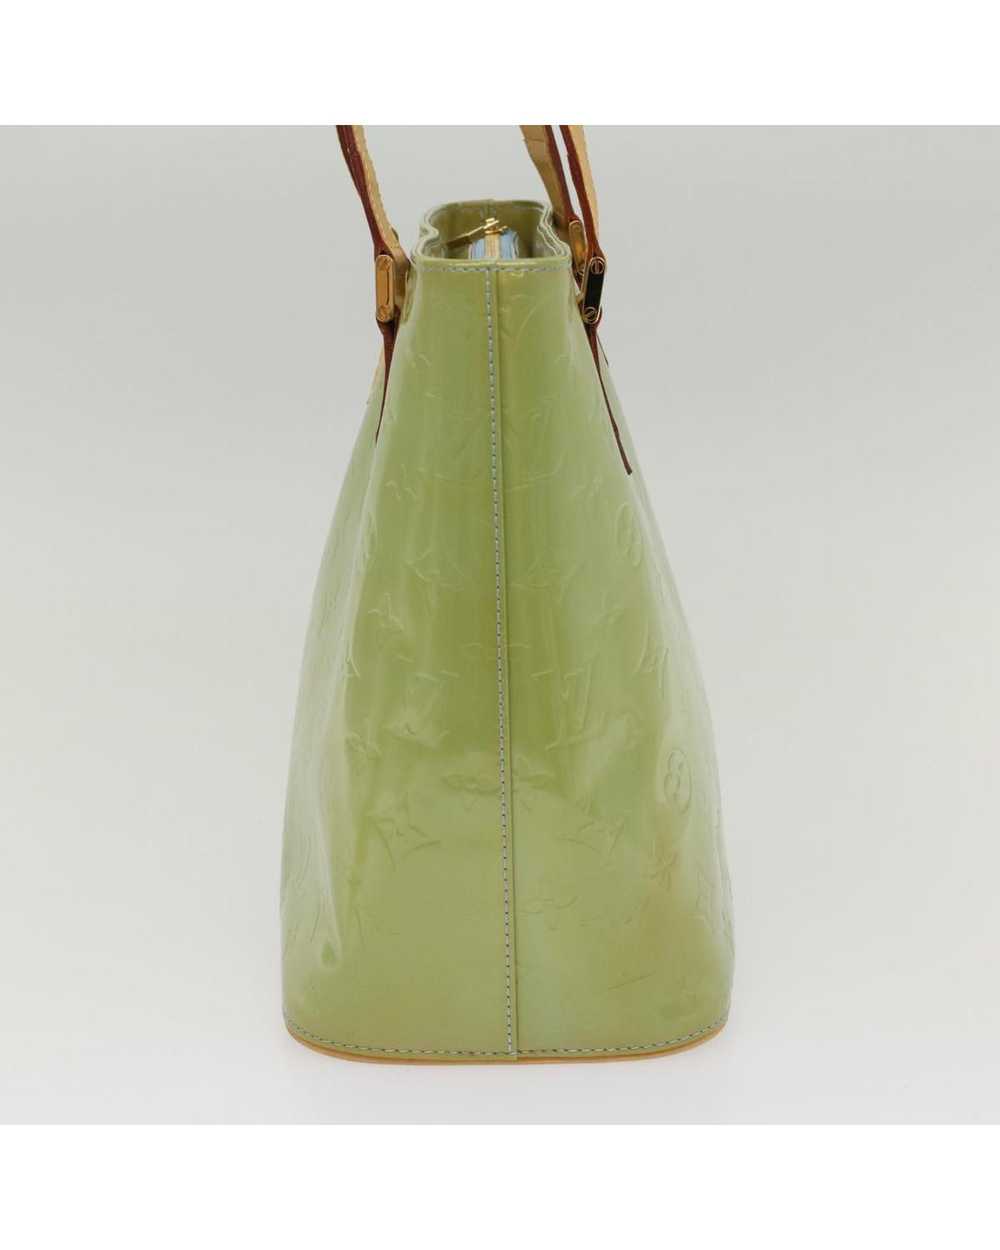 Louis Vuitton Green Patent Leather Handbag - image 4